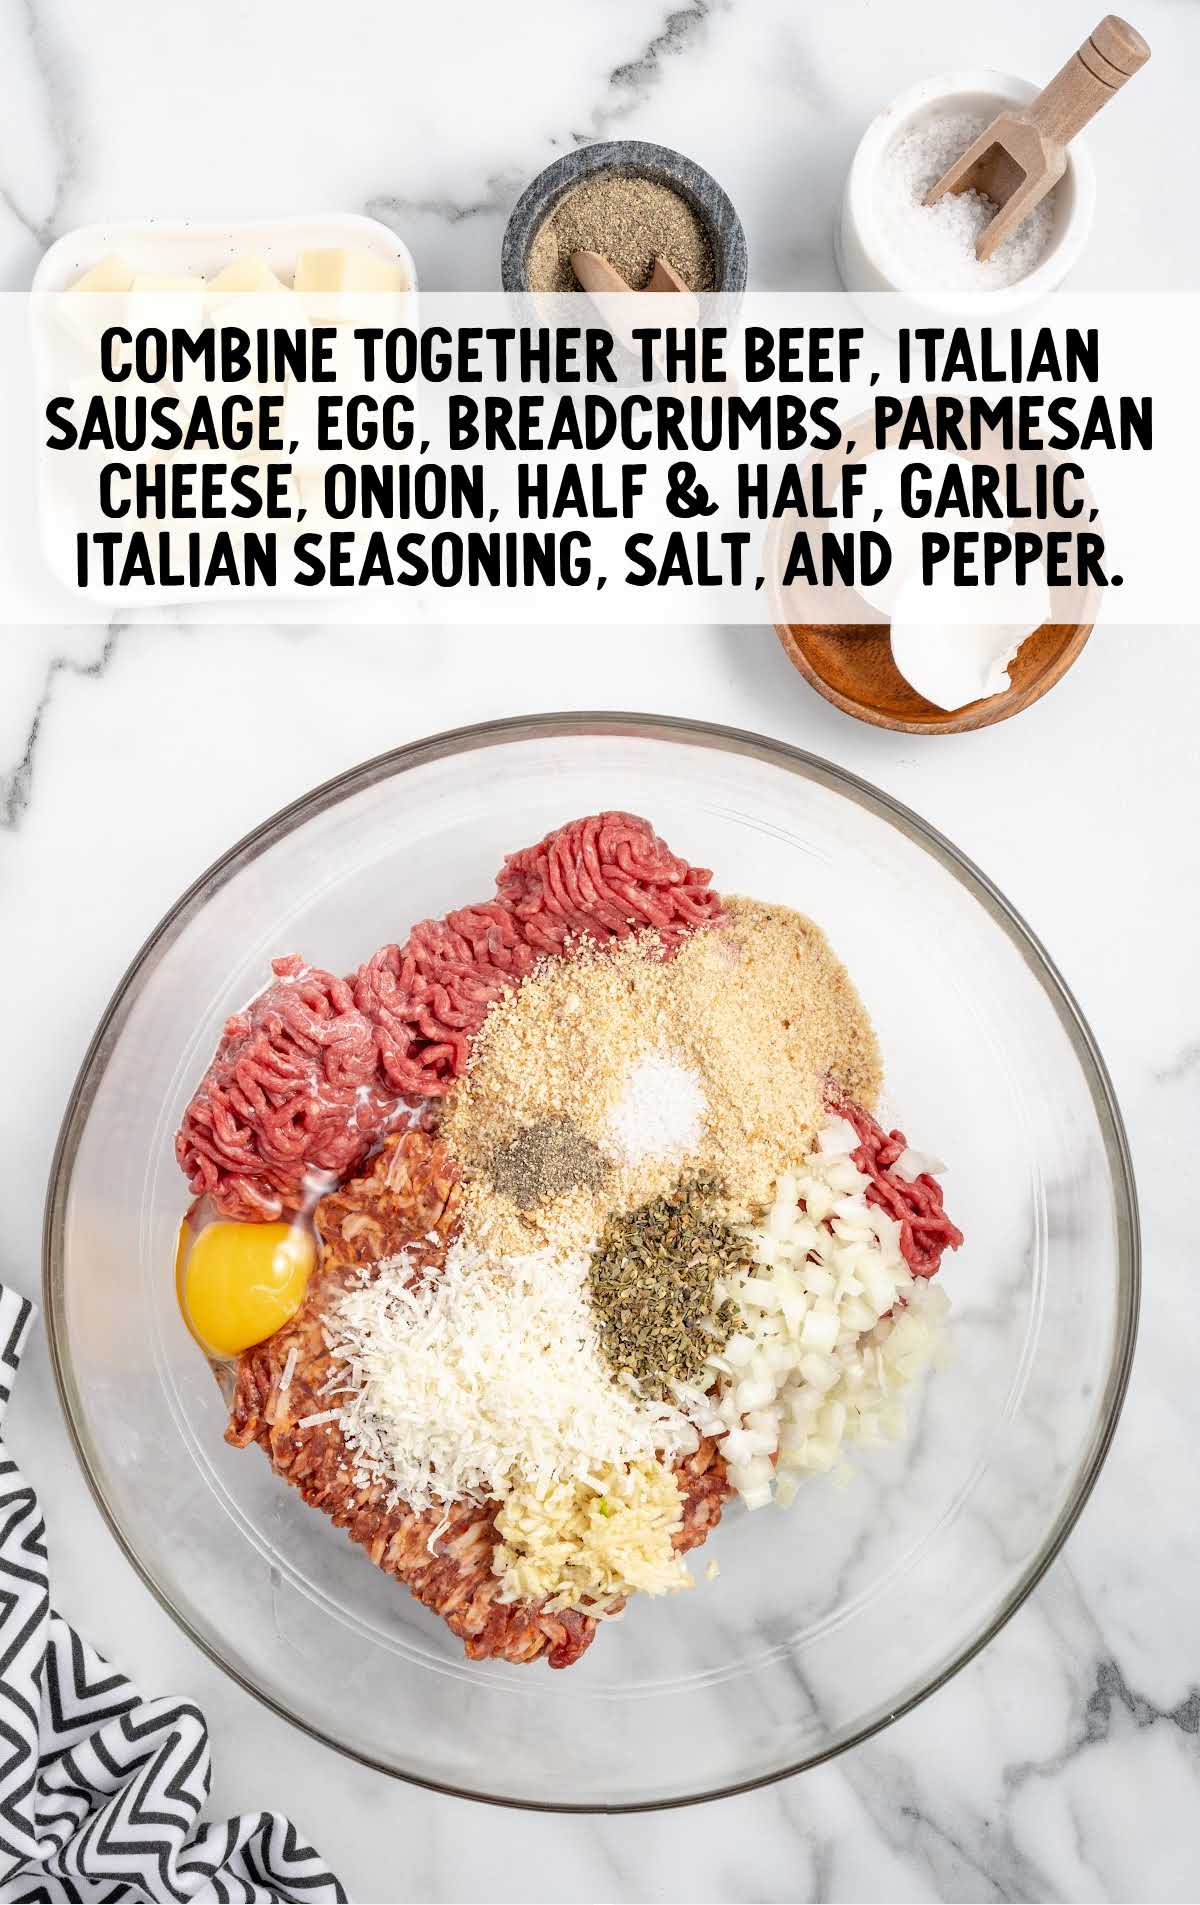 beef, italian sausage, egg, breadcrumbs, parmesan cheese, onion, half & half, garlic, italian seasoning, salt, and pepper combined